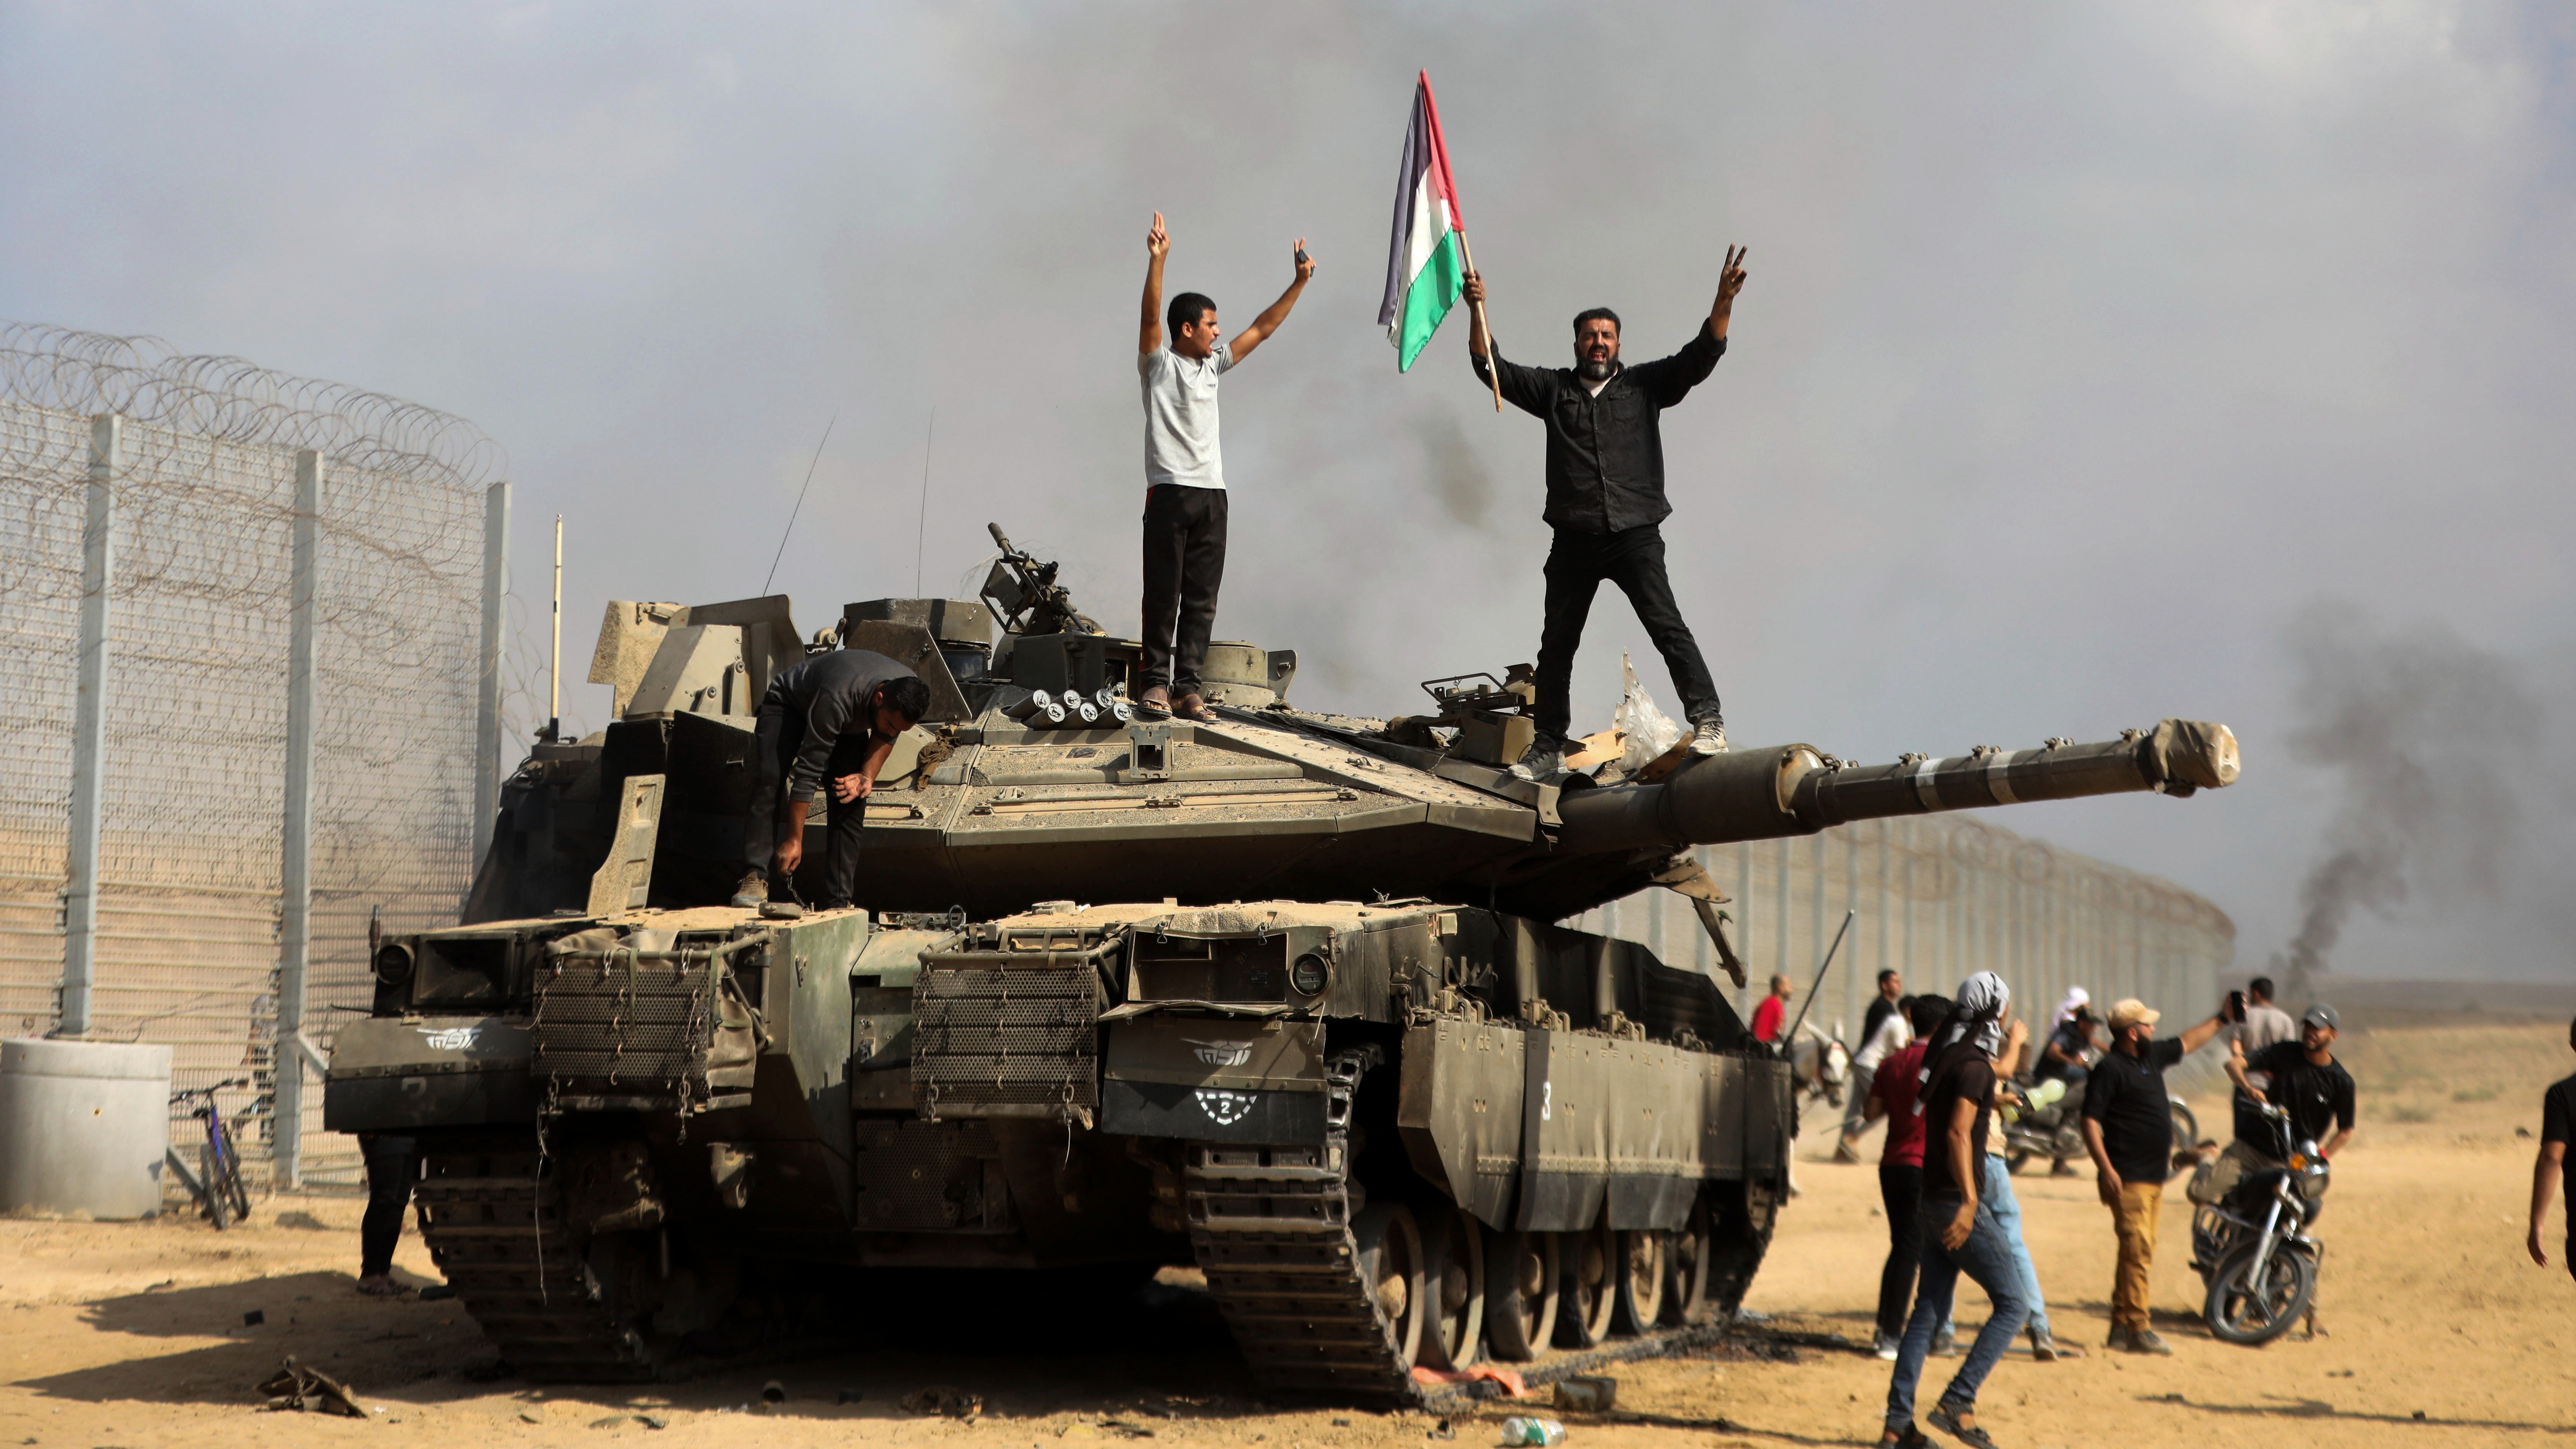 Hamas fighters on a captured Israeli tank near the Israel-Gaza border